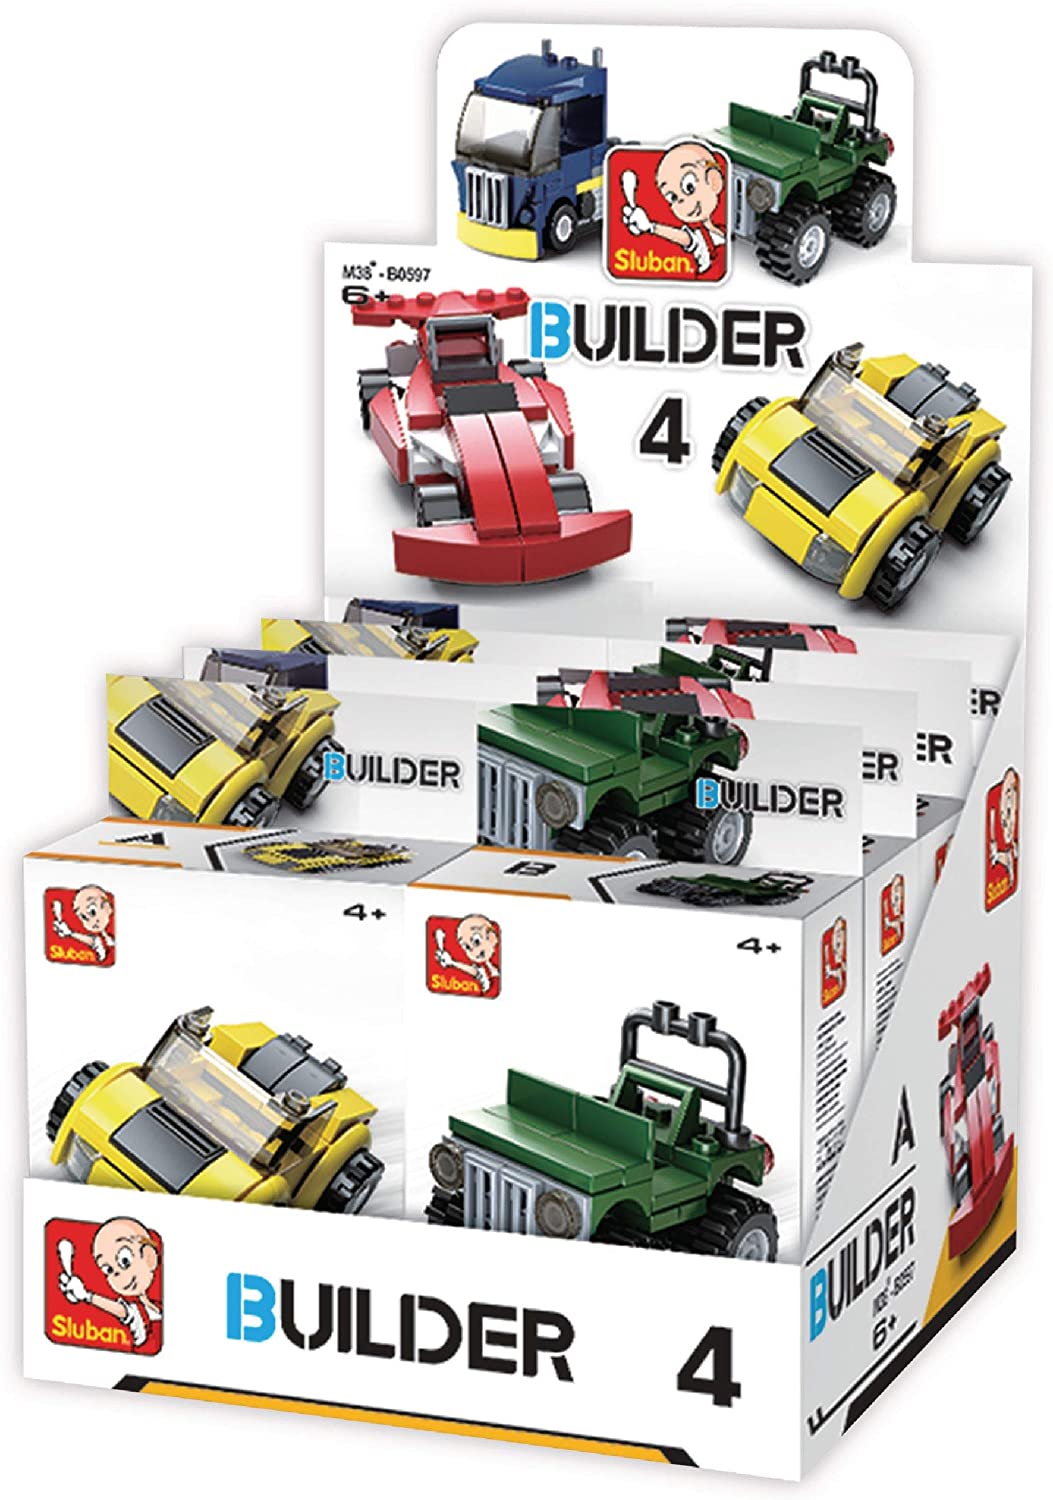 Sluban Building Blocks Builder [M38 B0597]